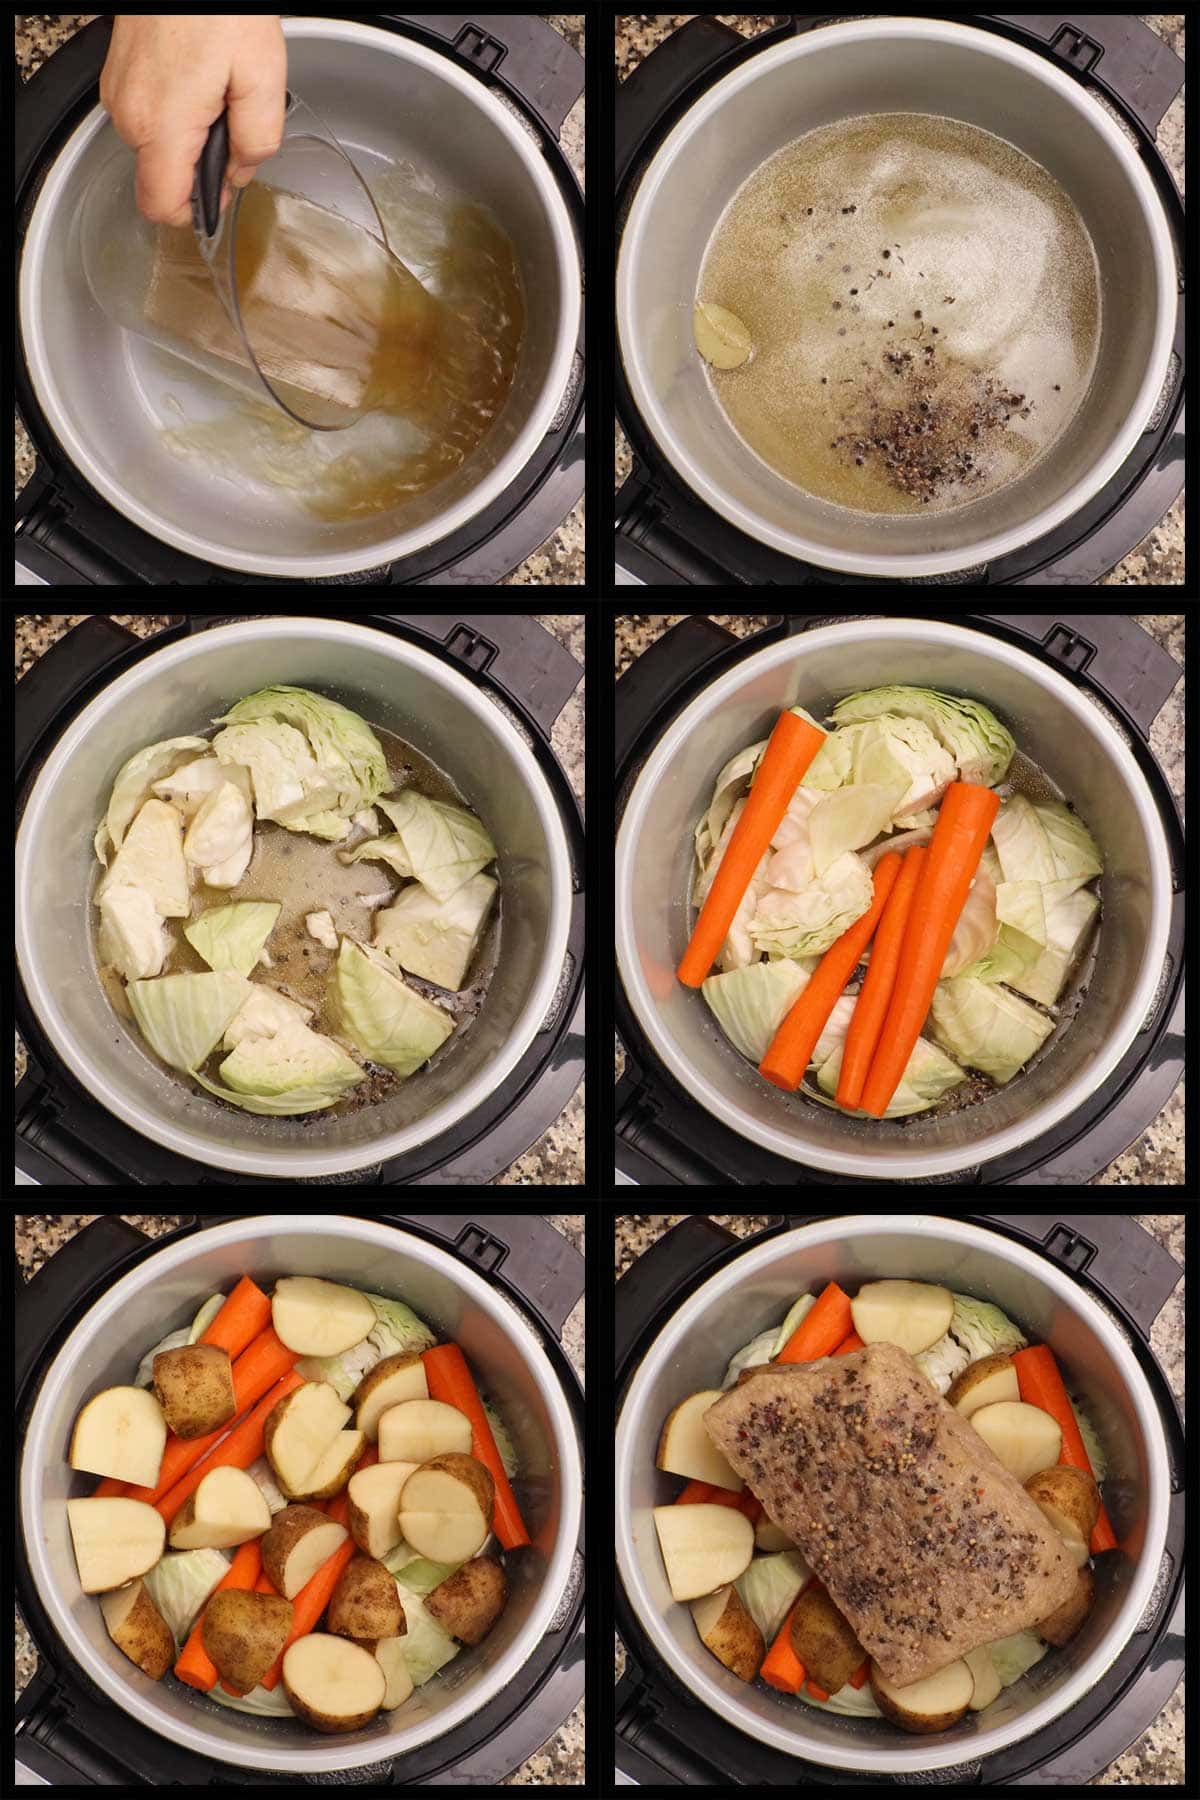 liquid, seasonings, veggies, and corned beef into inner pot